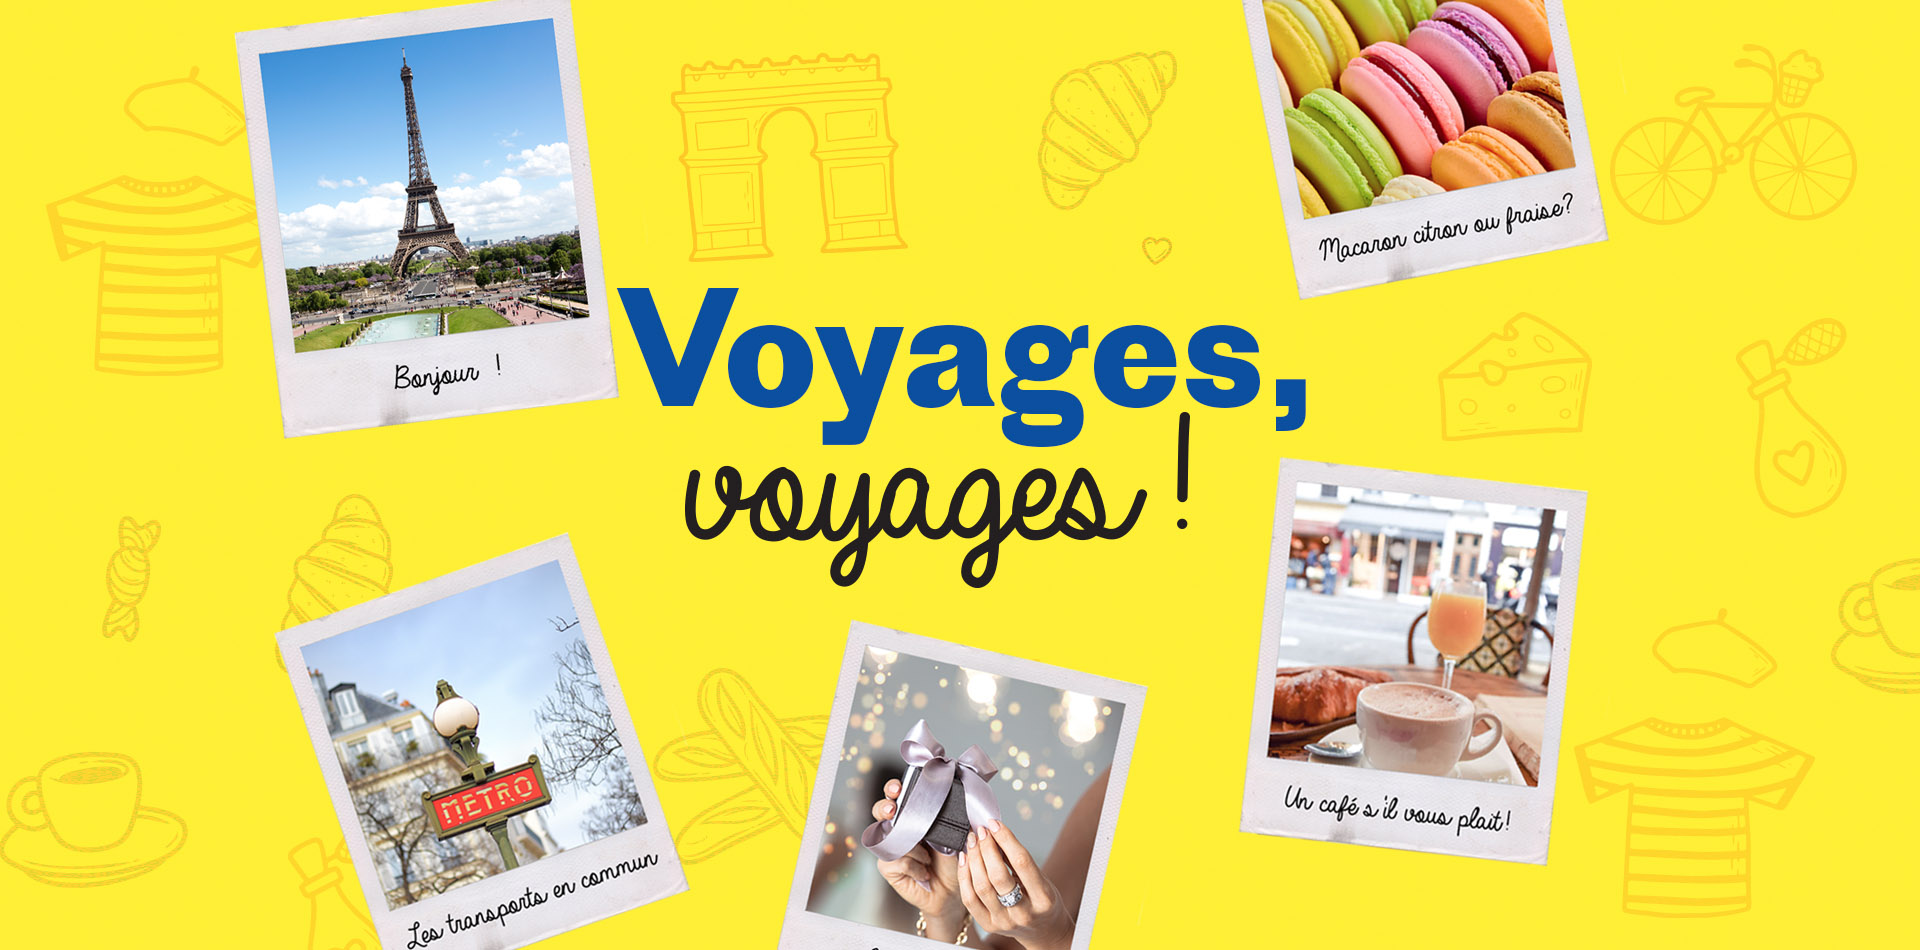 Voyages voyages